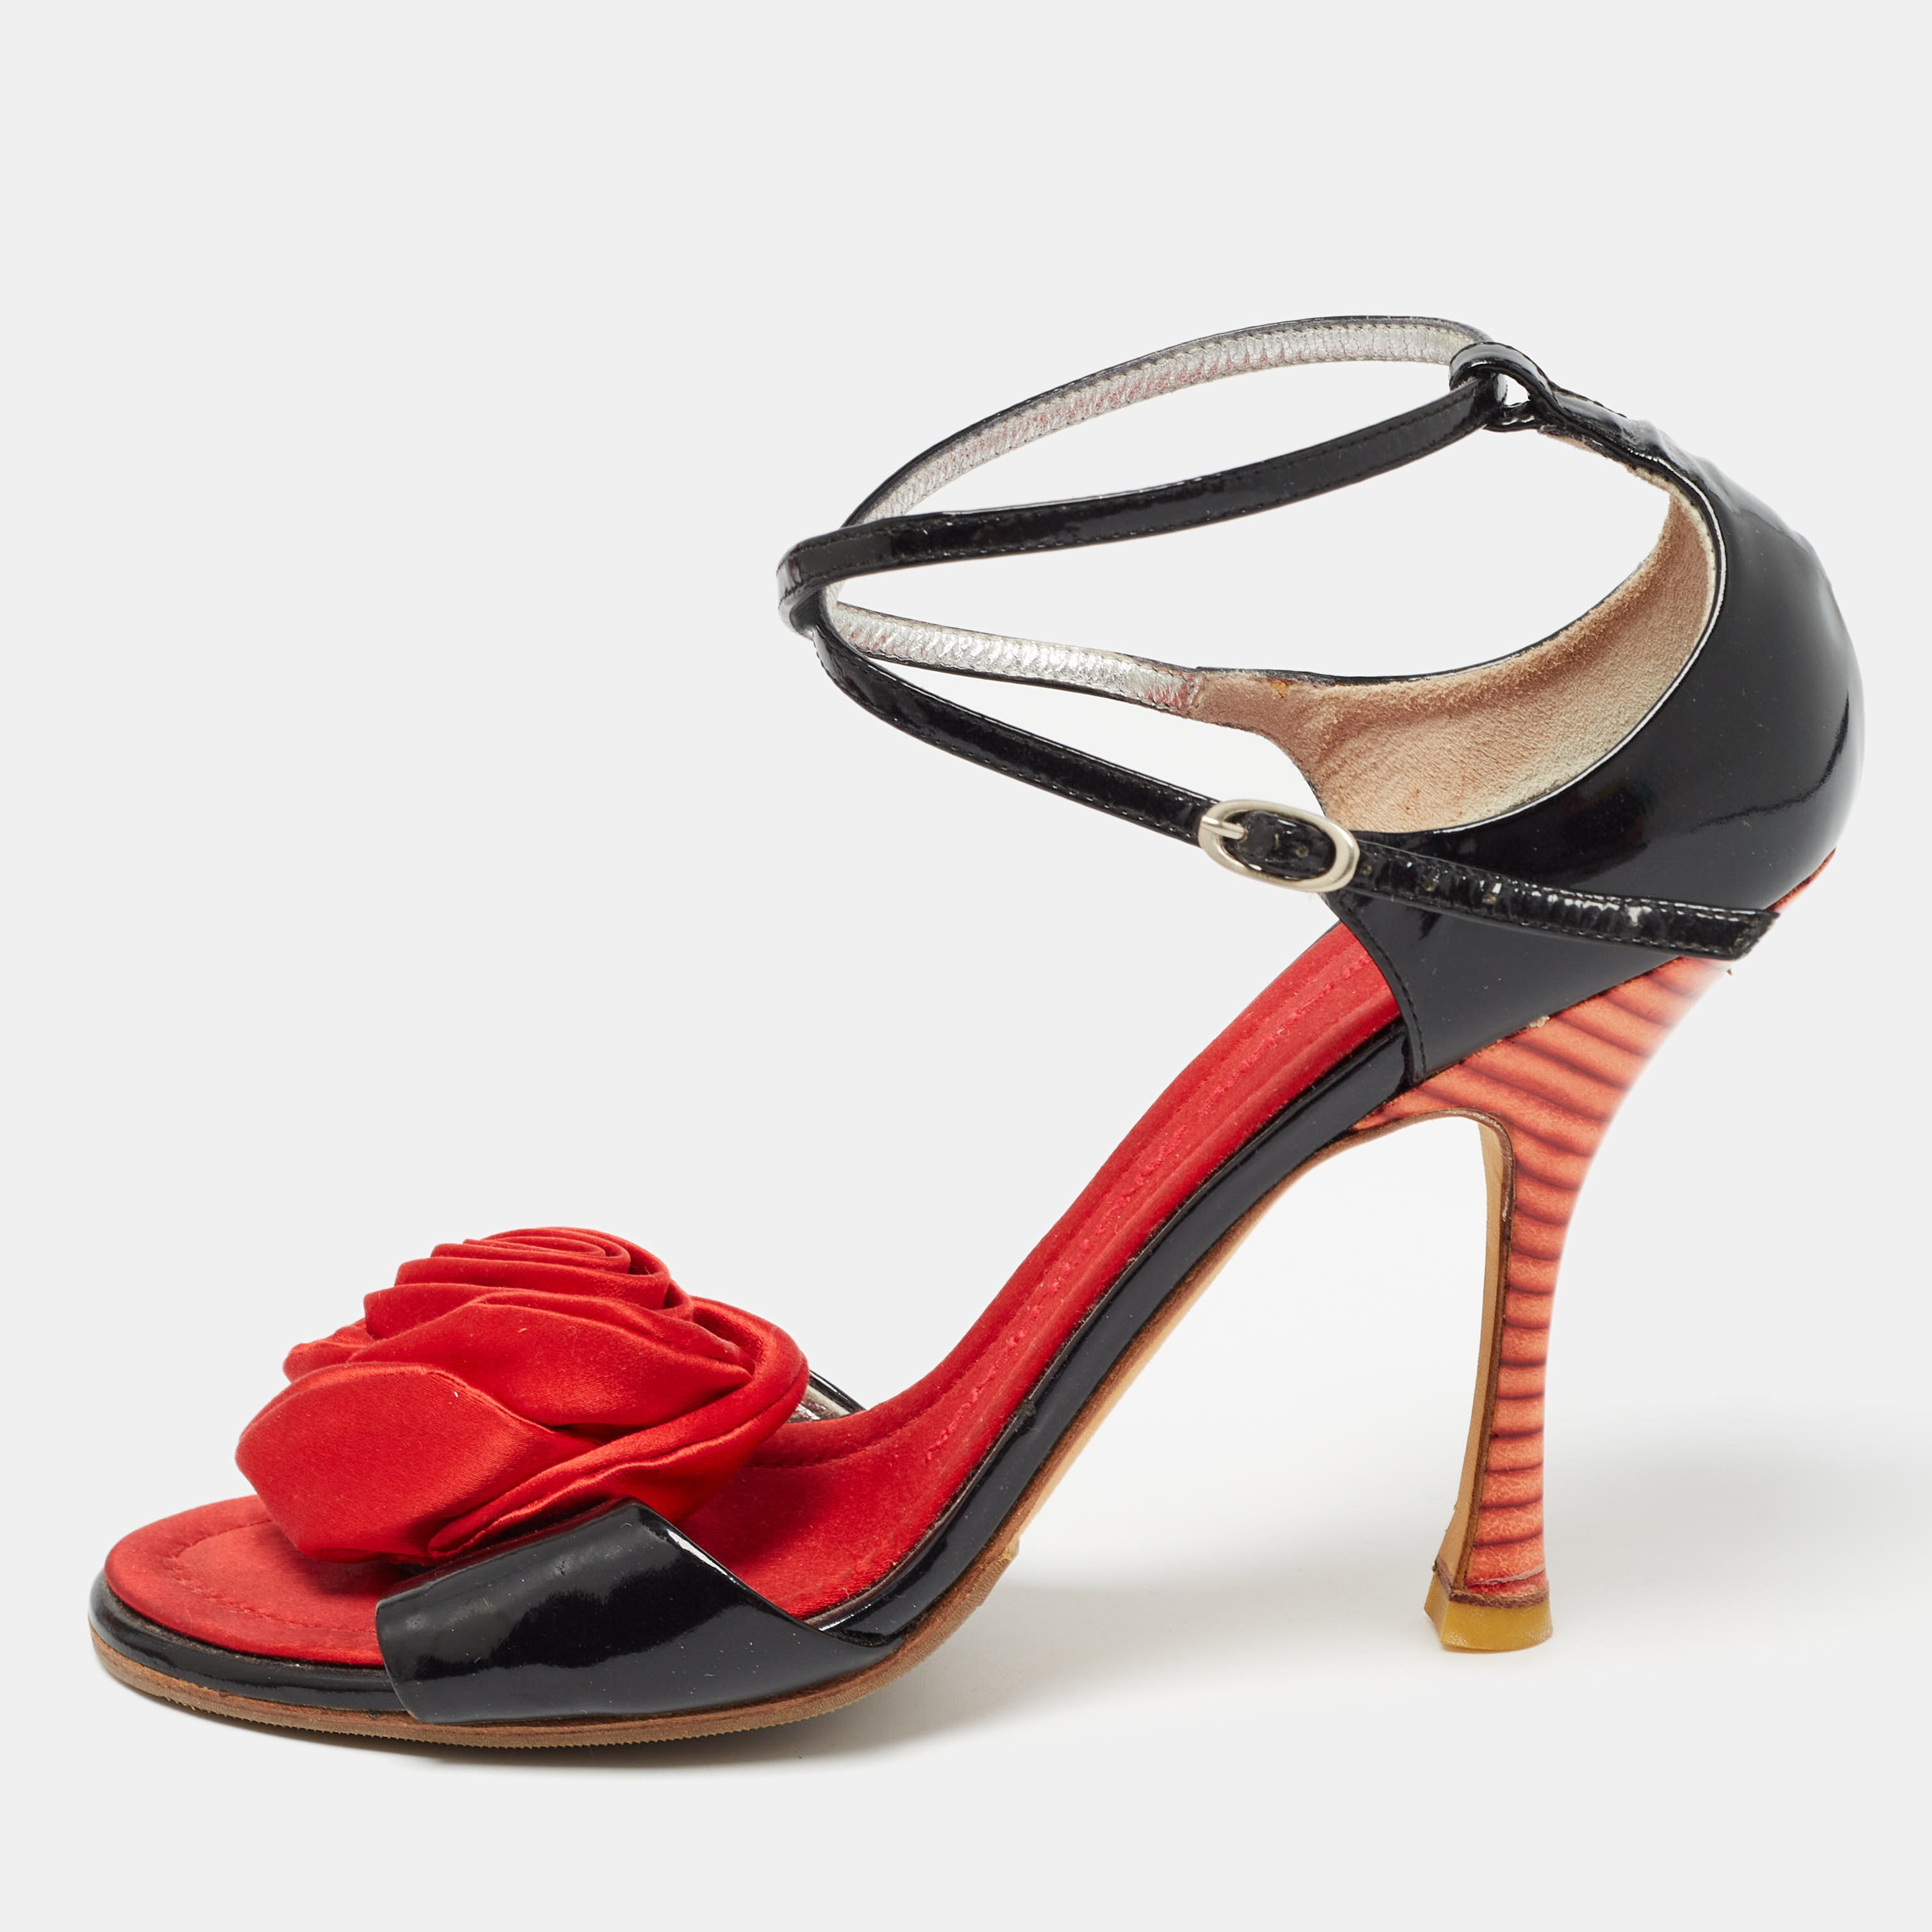 Black/ Patent Leather And Satin Rose Applique Sandals